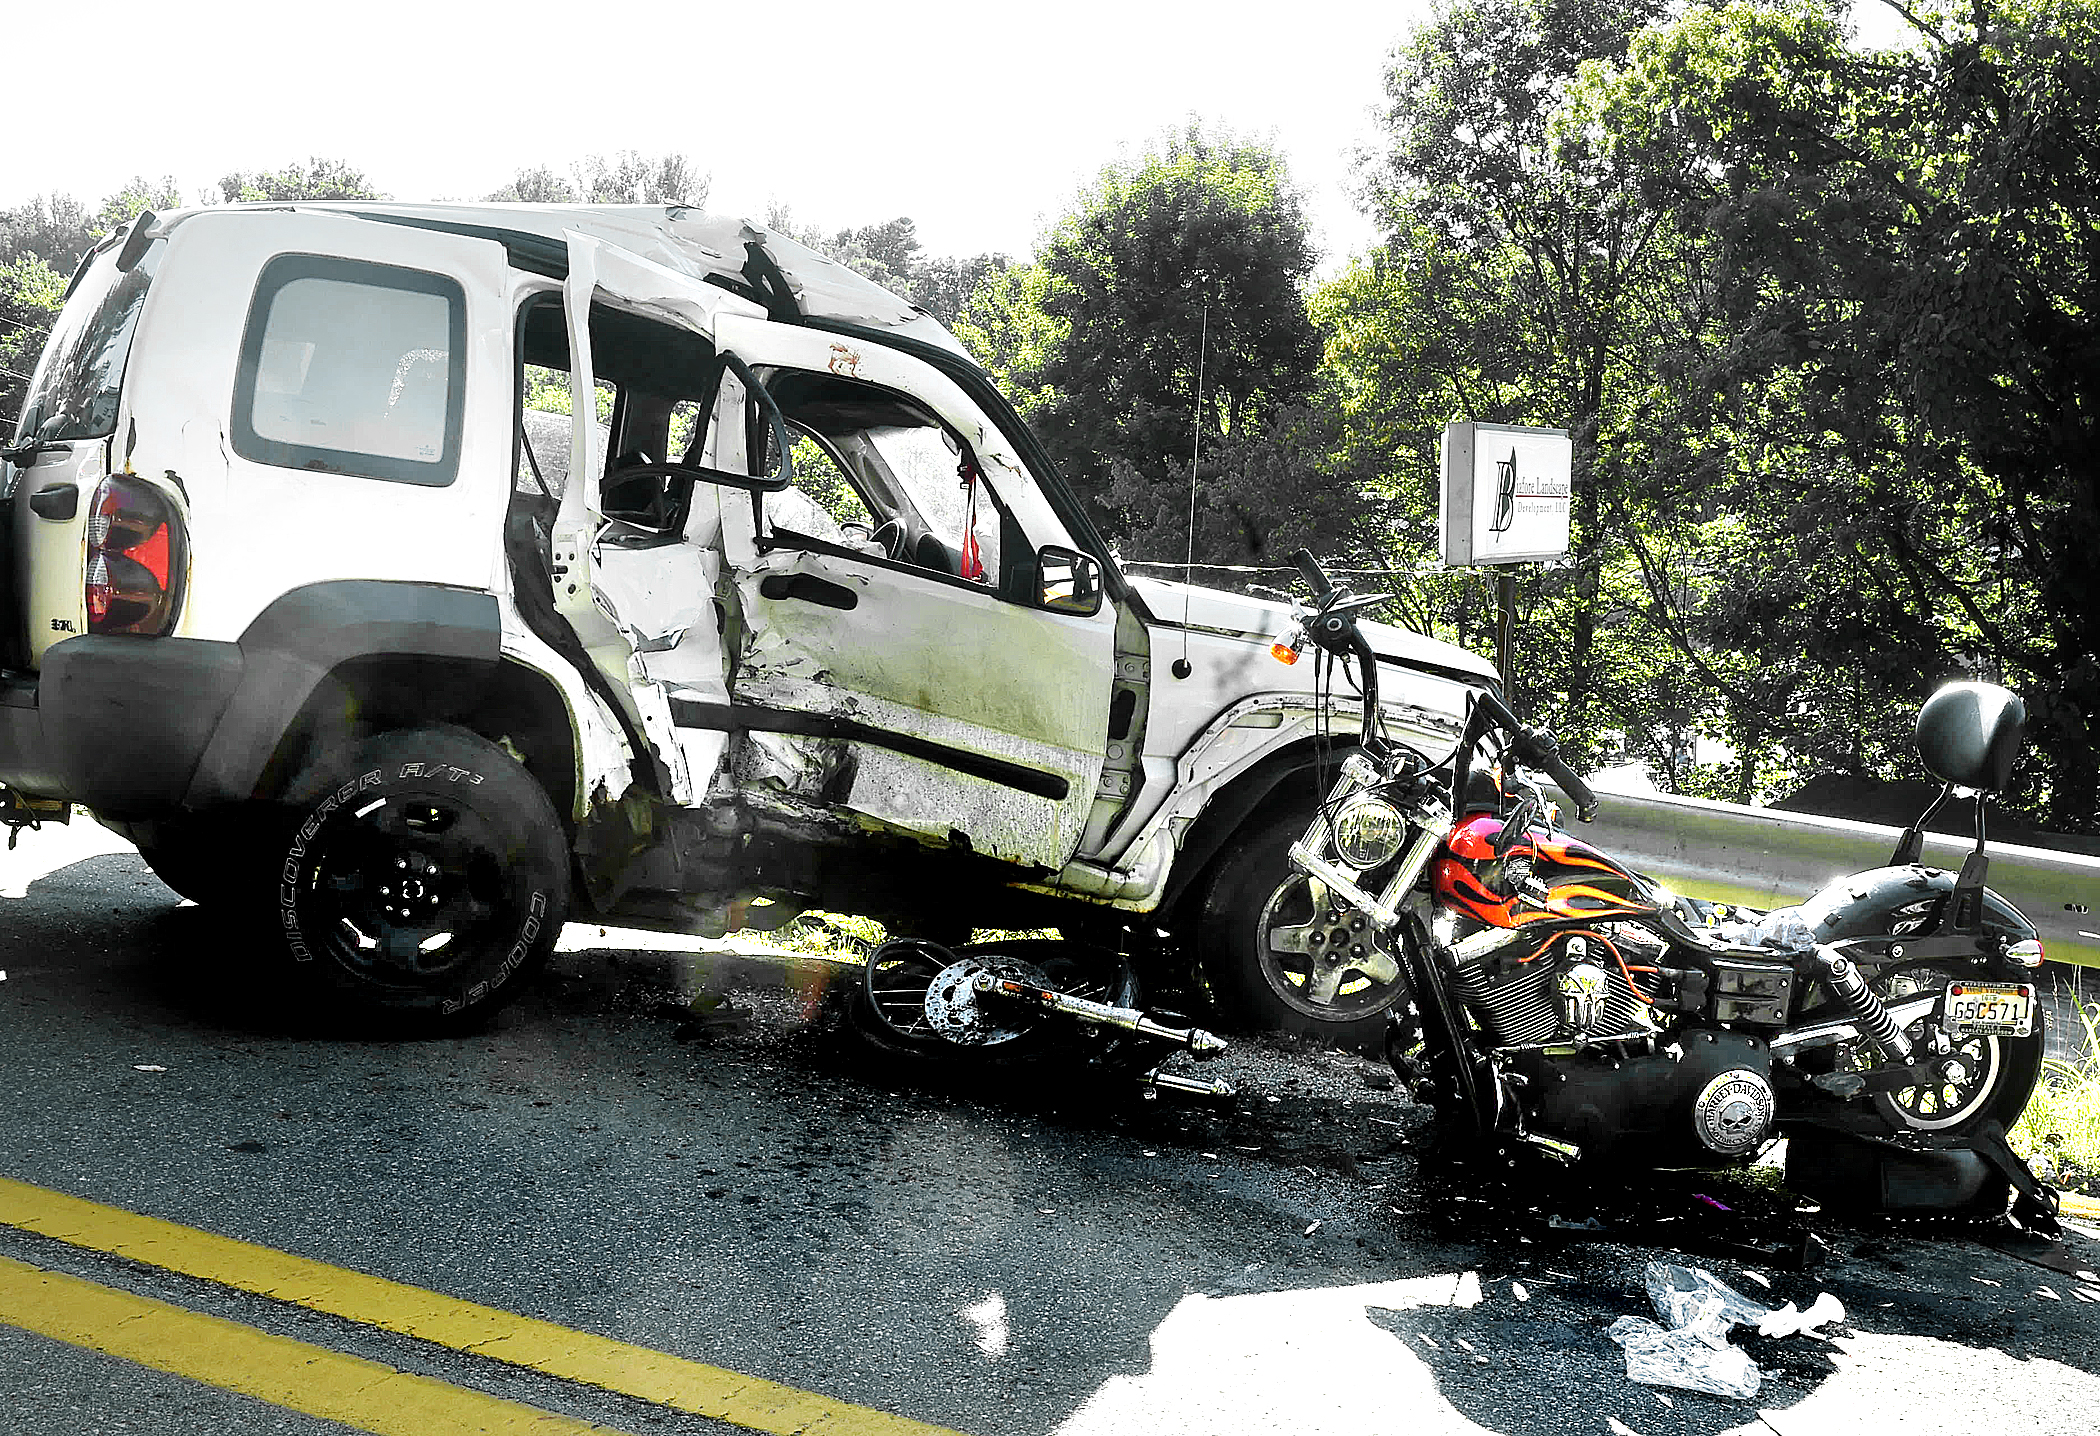 2 motorcycle crash into van on Jefferson and Fulton : r/grandrapids